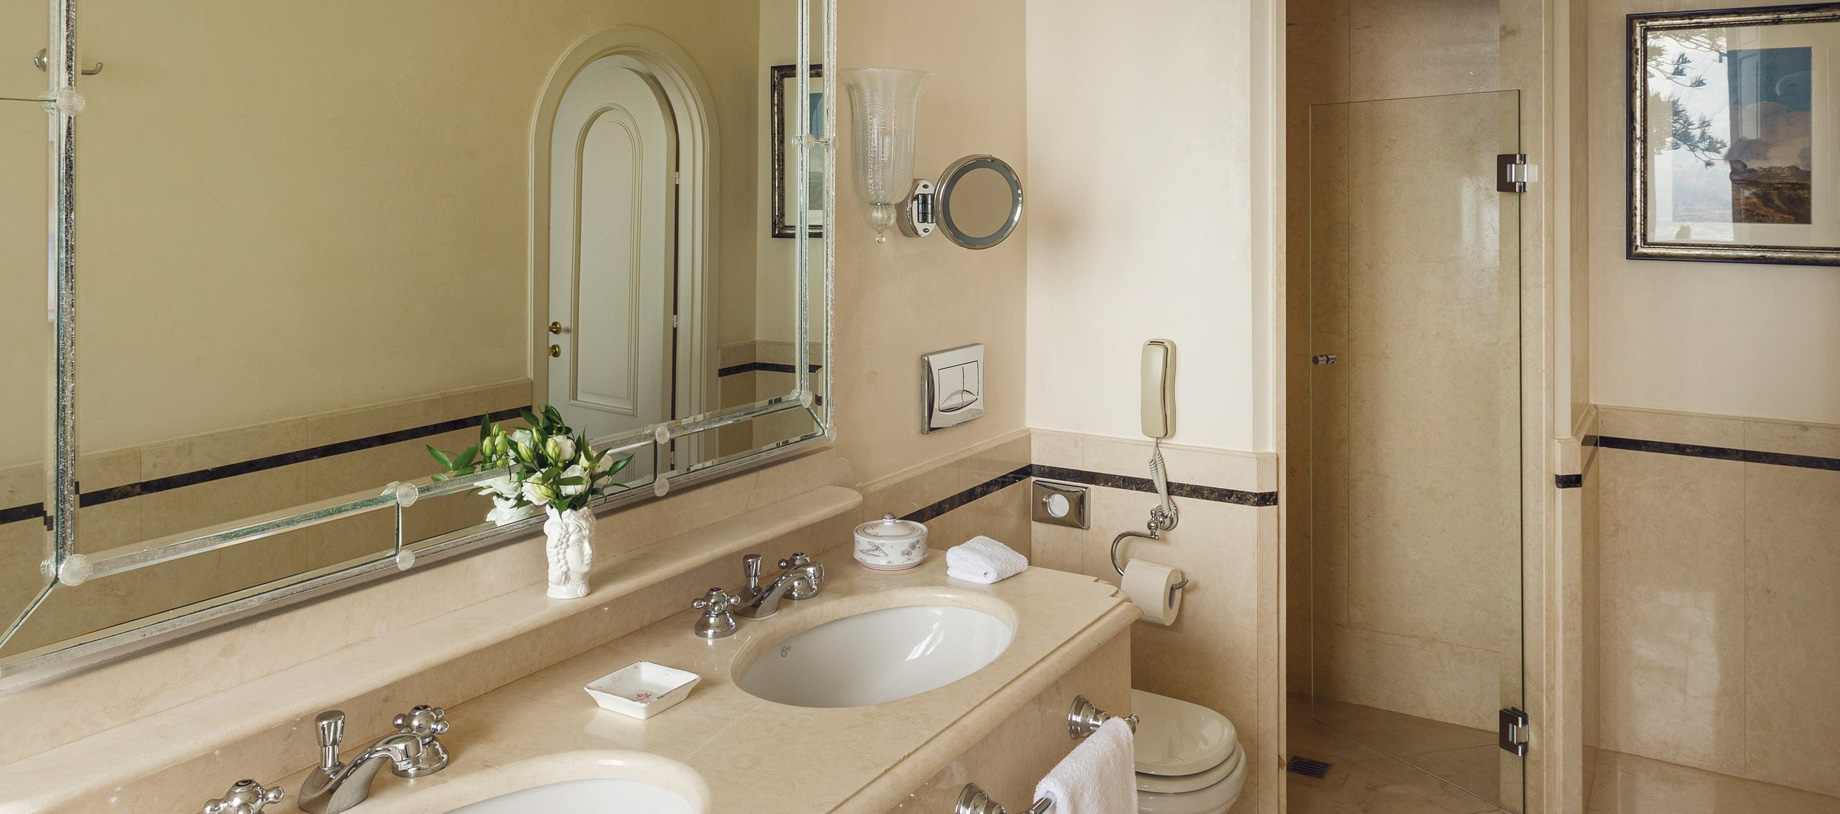 147 – Grand Hotel Timeo, A Belmond Hotel – Taormina, Italy – Bathroom